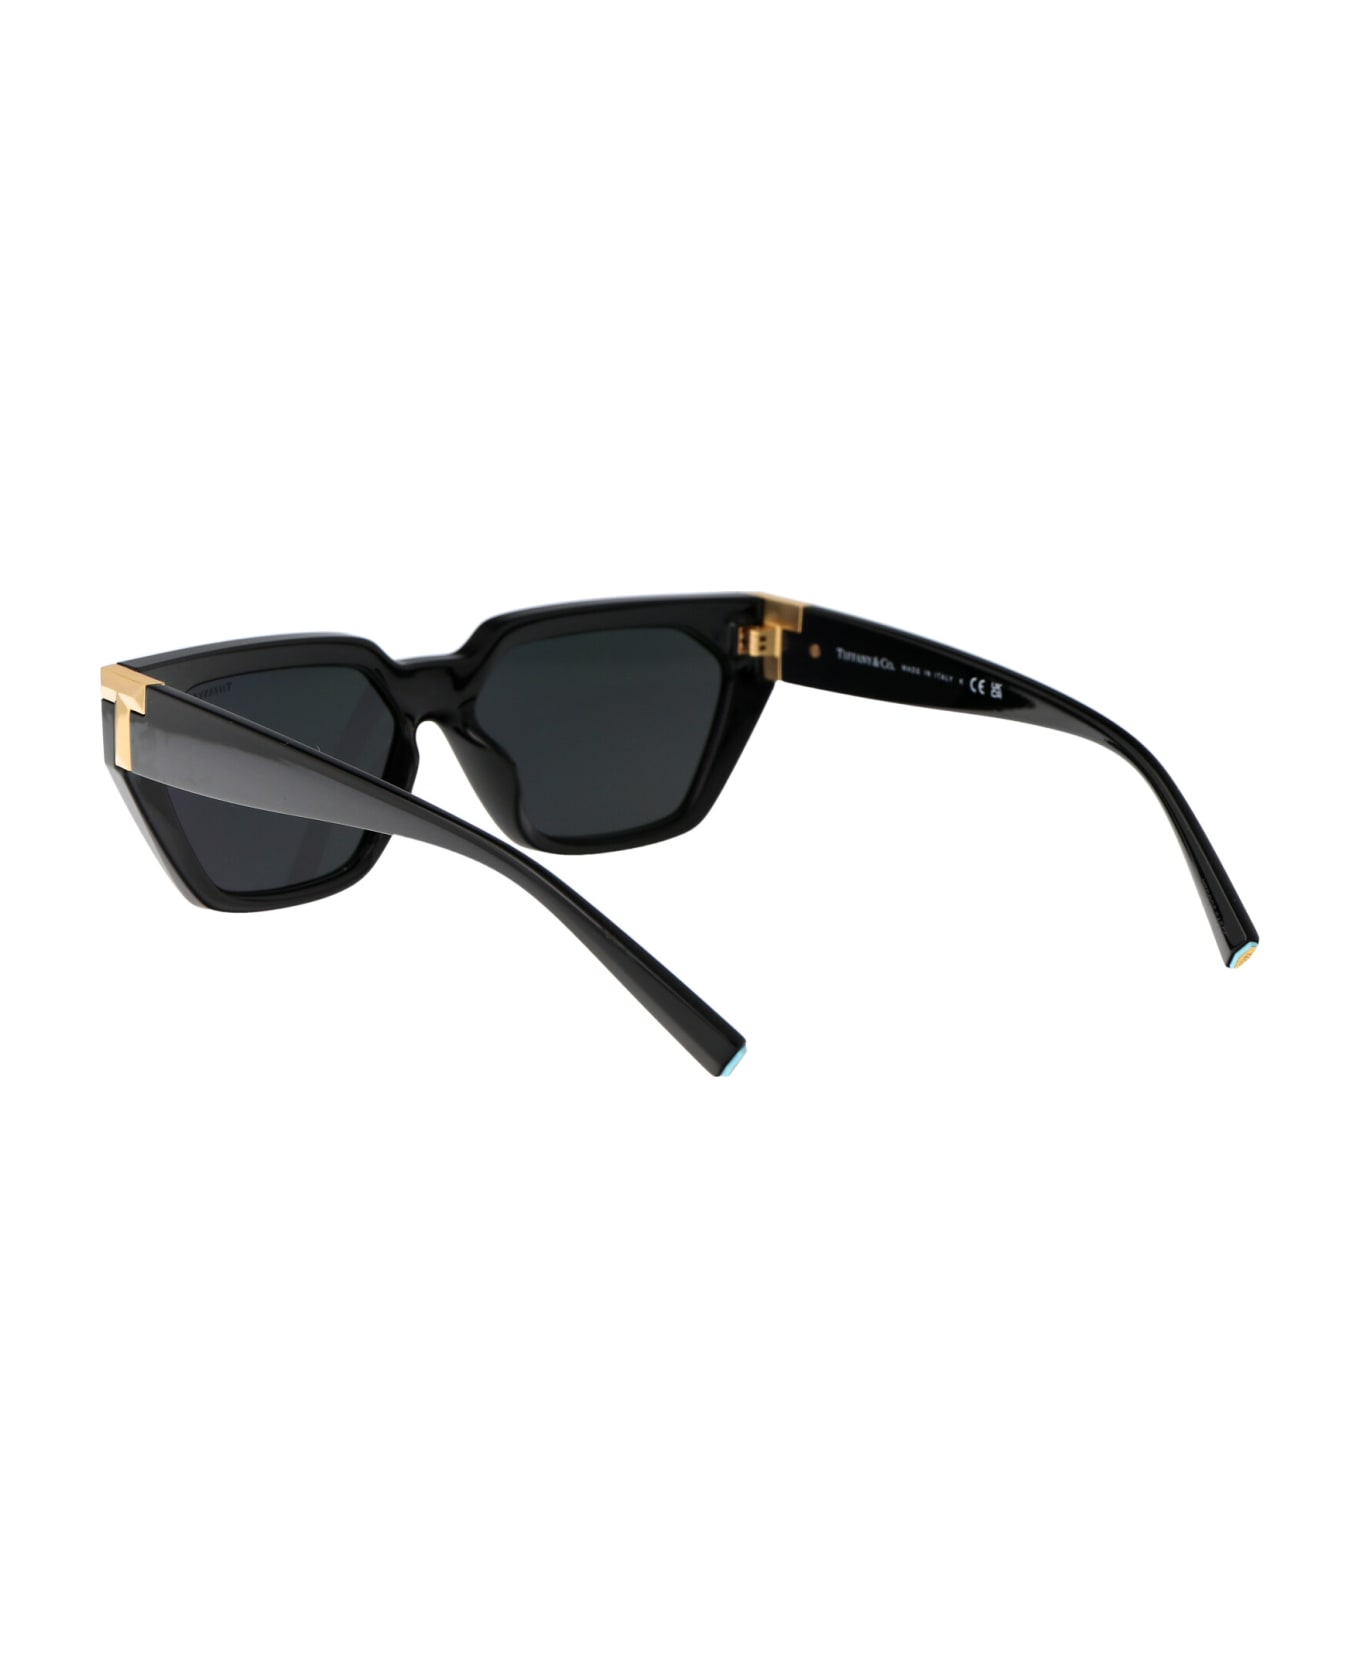 Tiffany & Co. 0tf4205u Sunglasses - 8001S4 Black